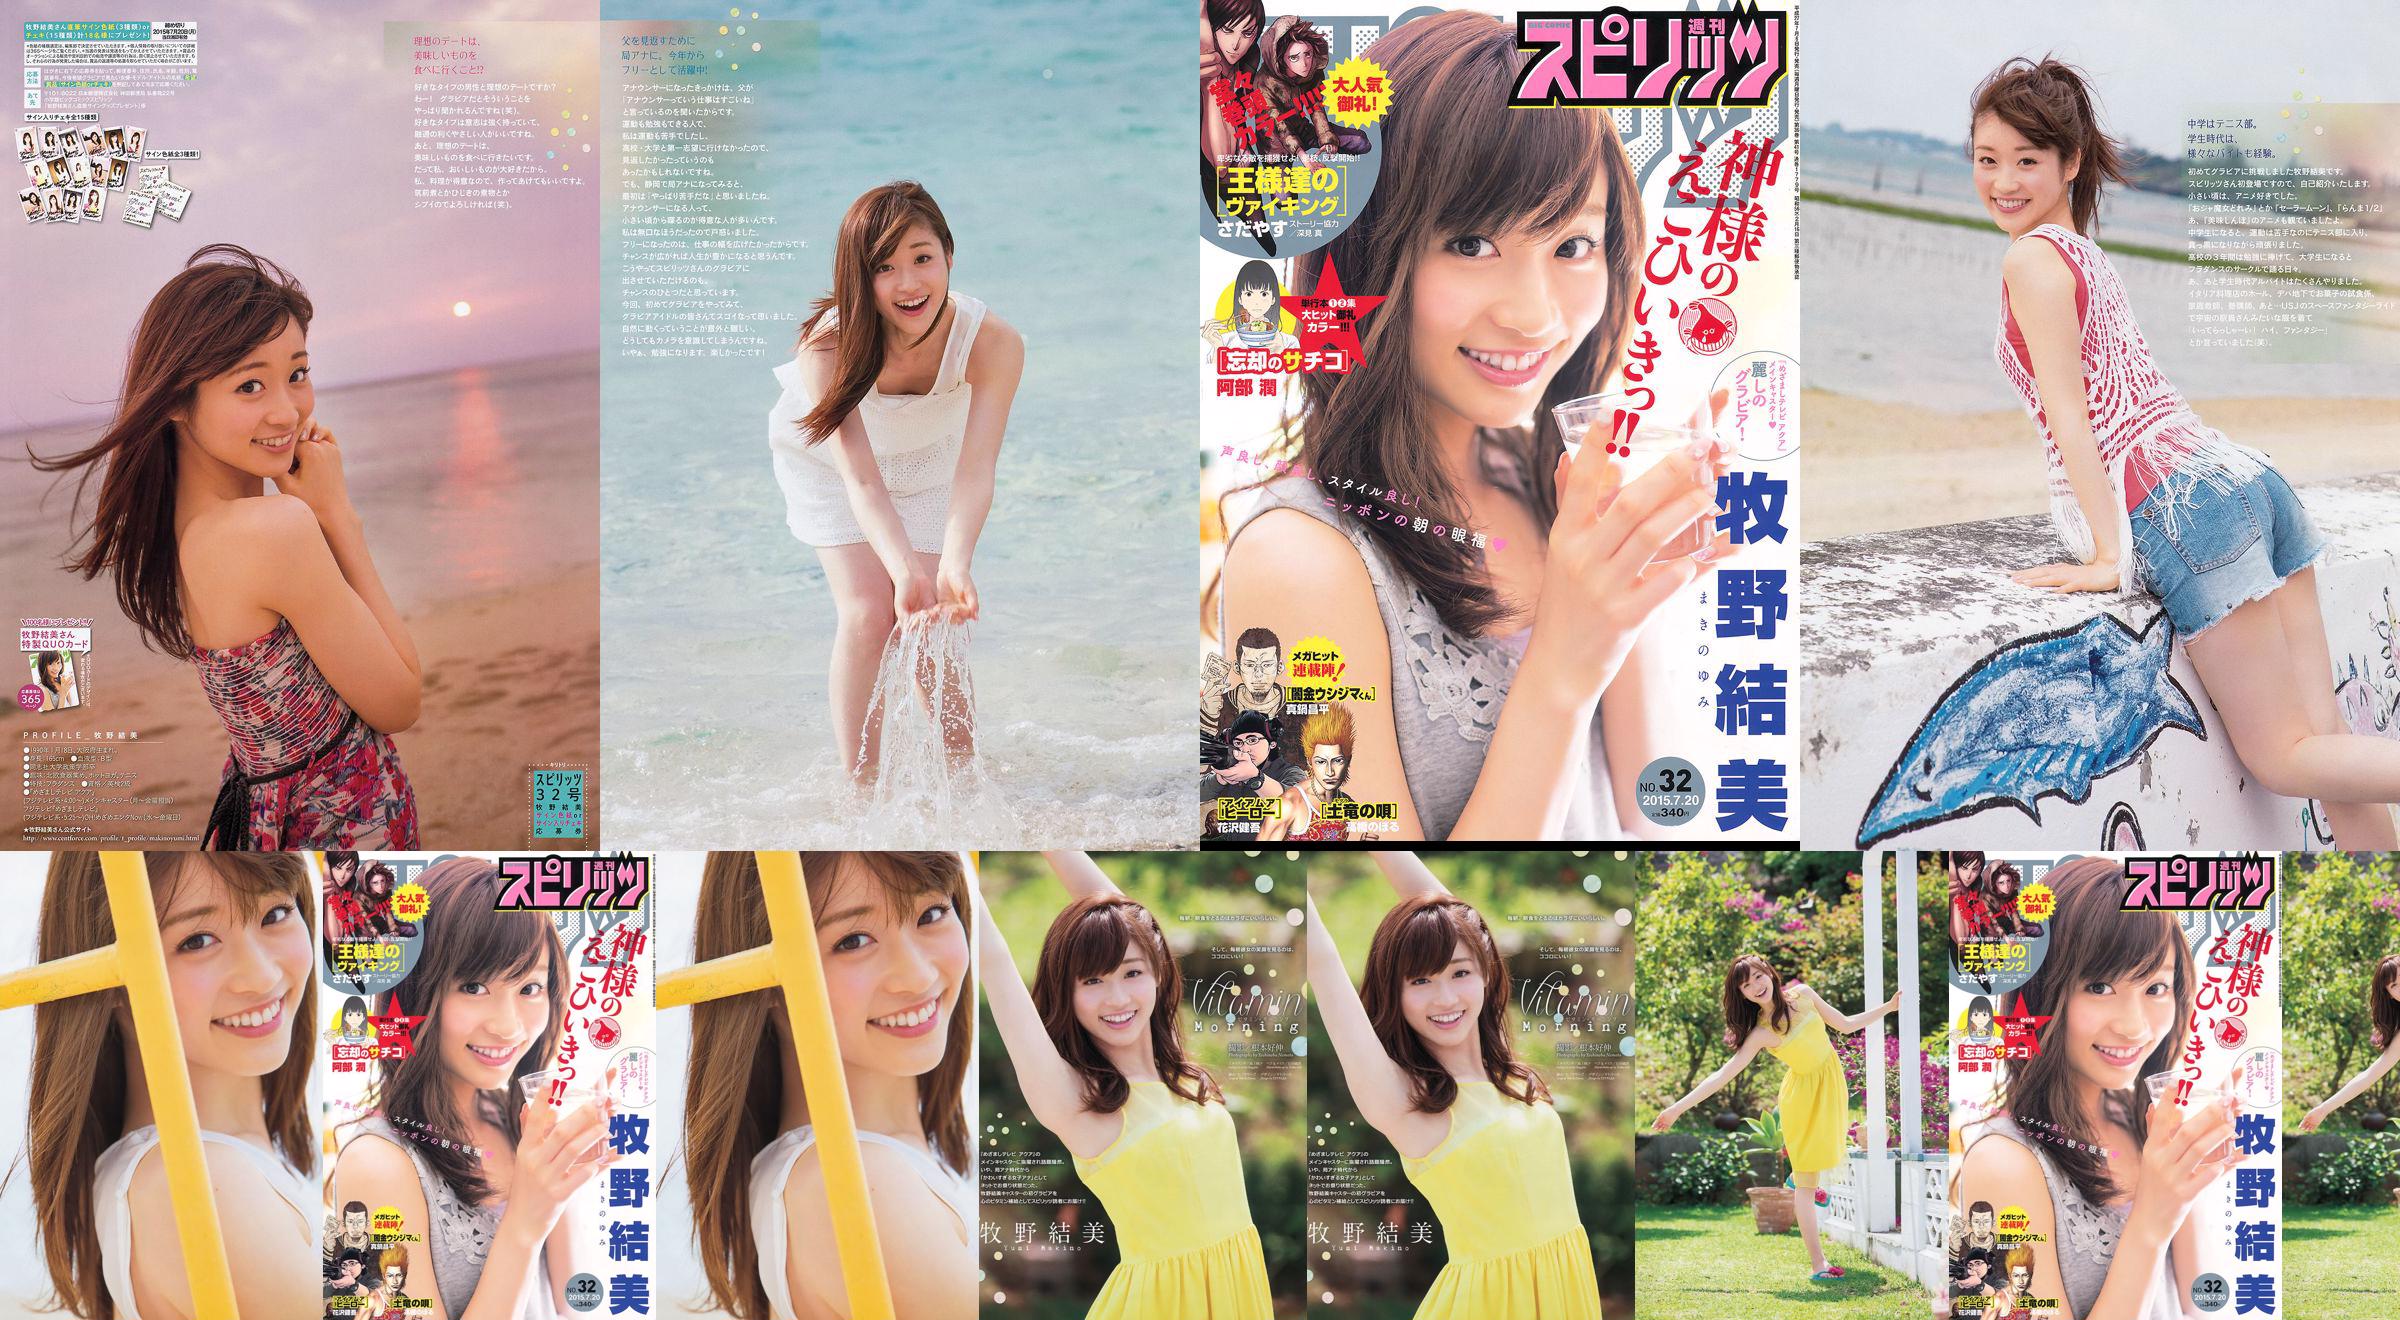 [Wöchentliche große Comic-Geister] Yumi Makino 2015 No.32 Photo Magazine No.bd06e6 Seite 1